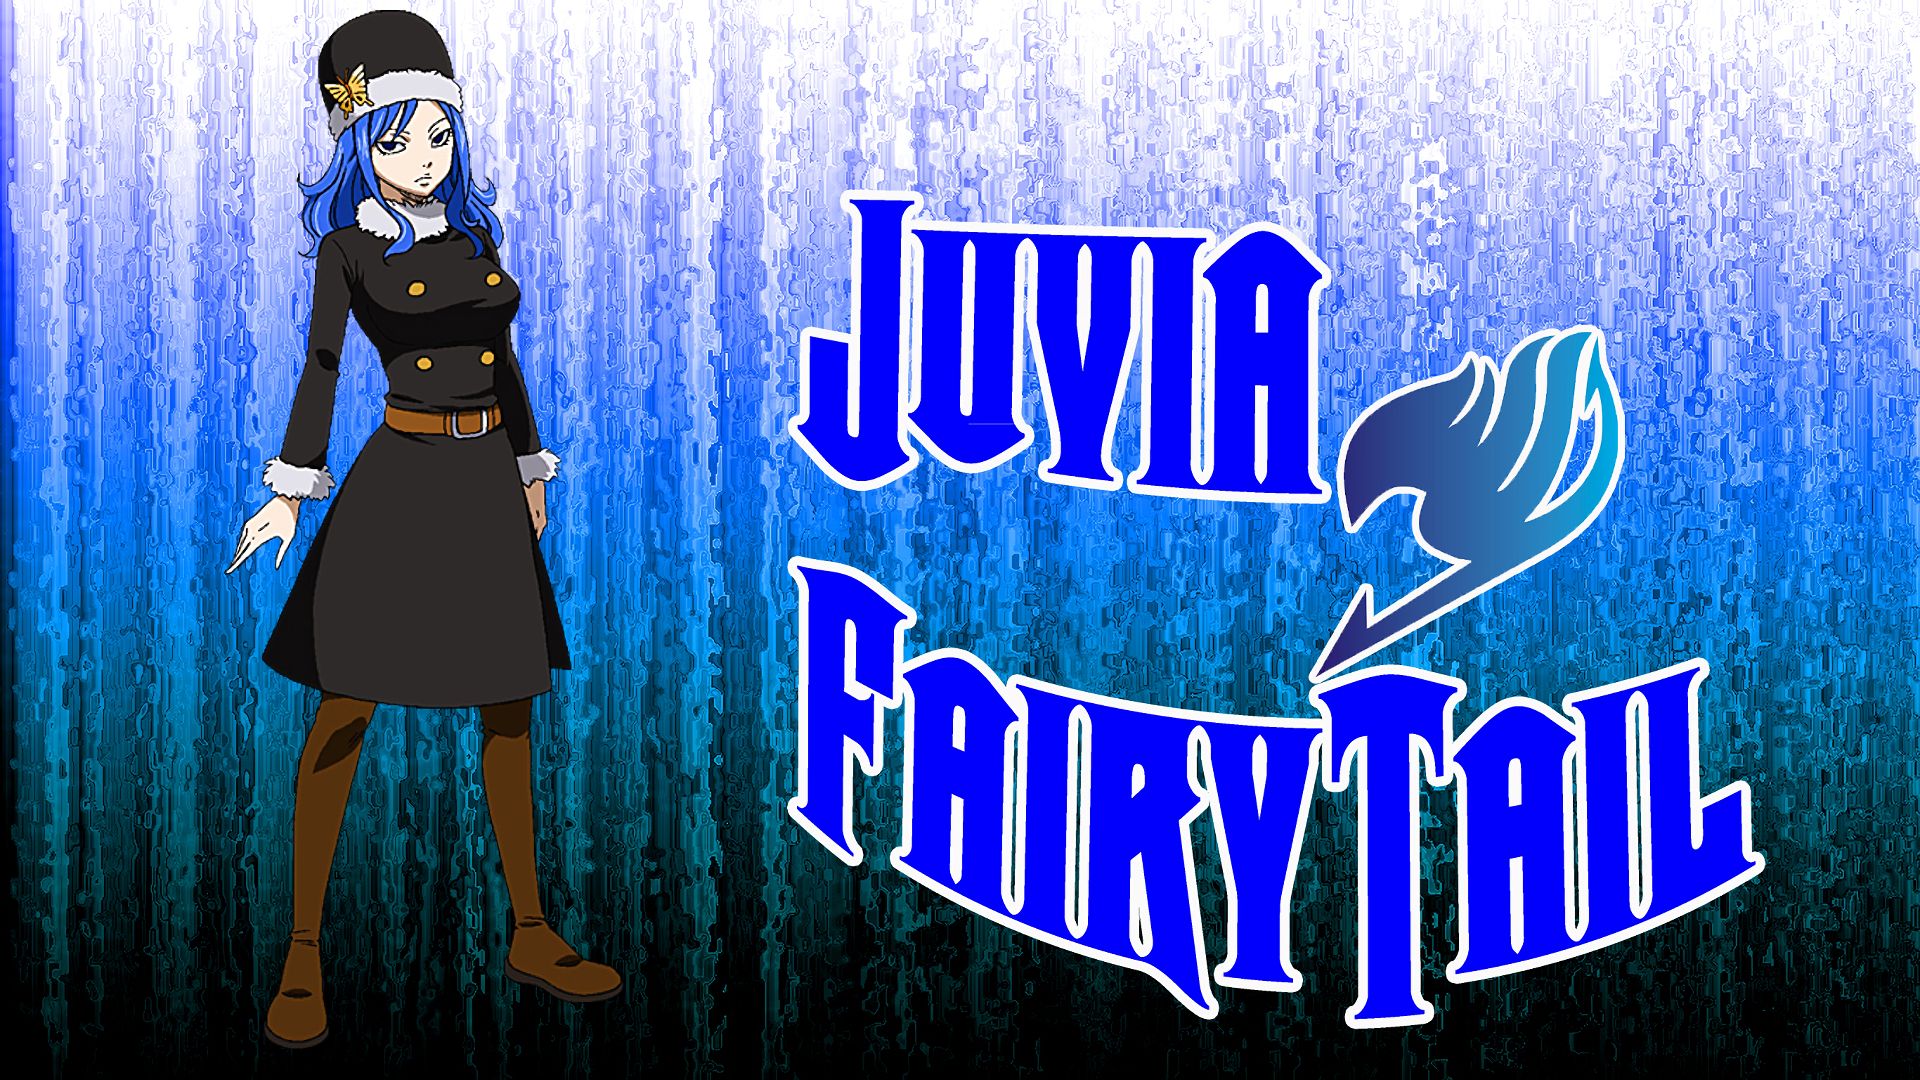 Descarga gratis la imagen Fairy Tail, Animado, Juvia Lockser en el escritorio de tu PC